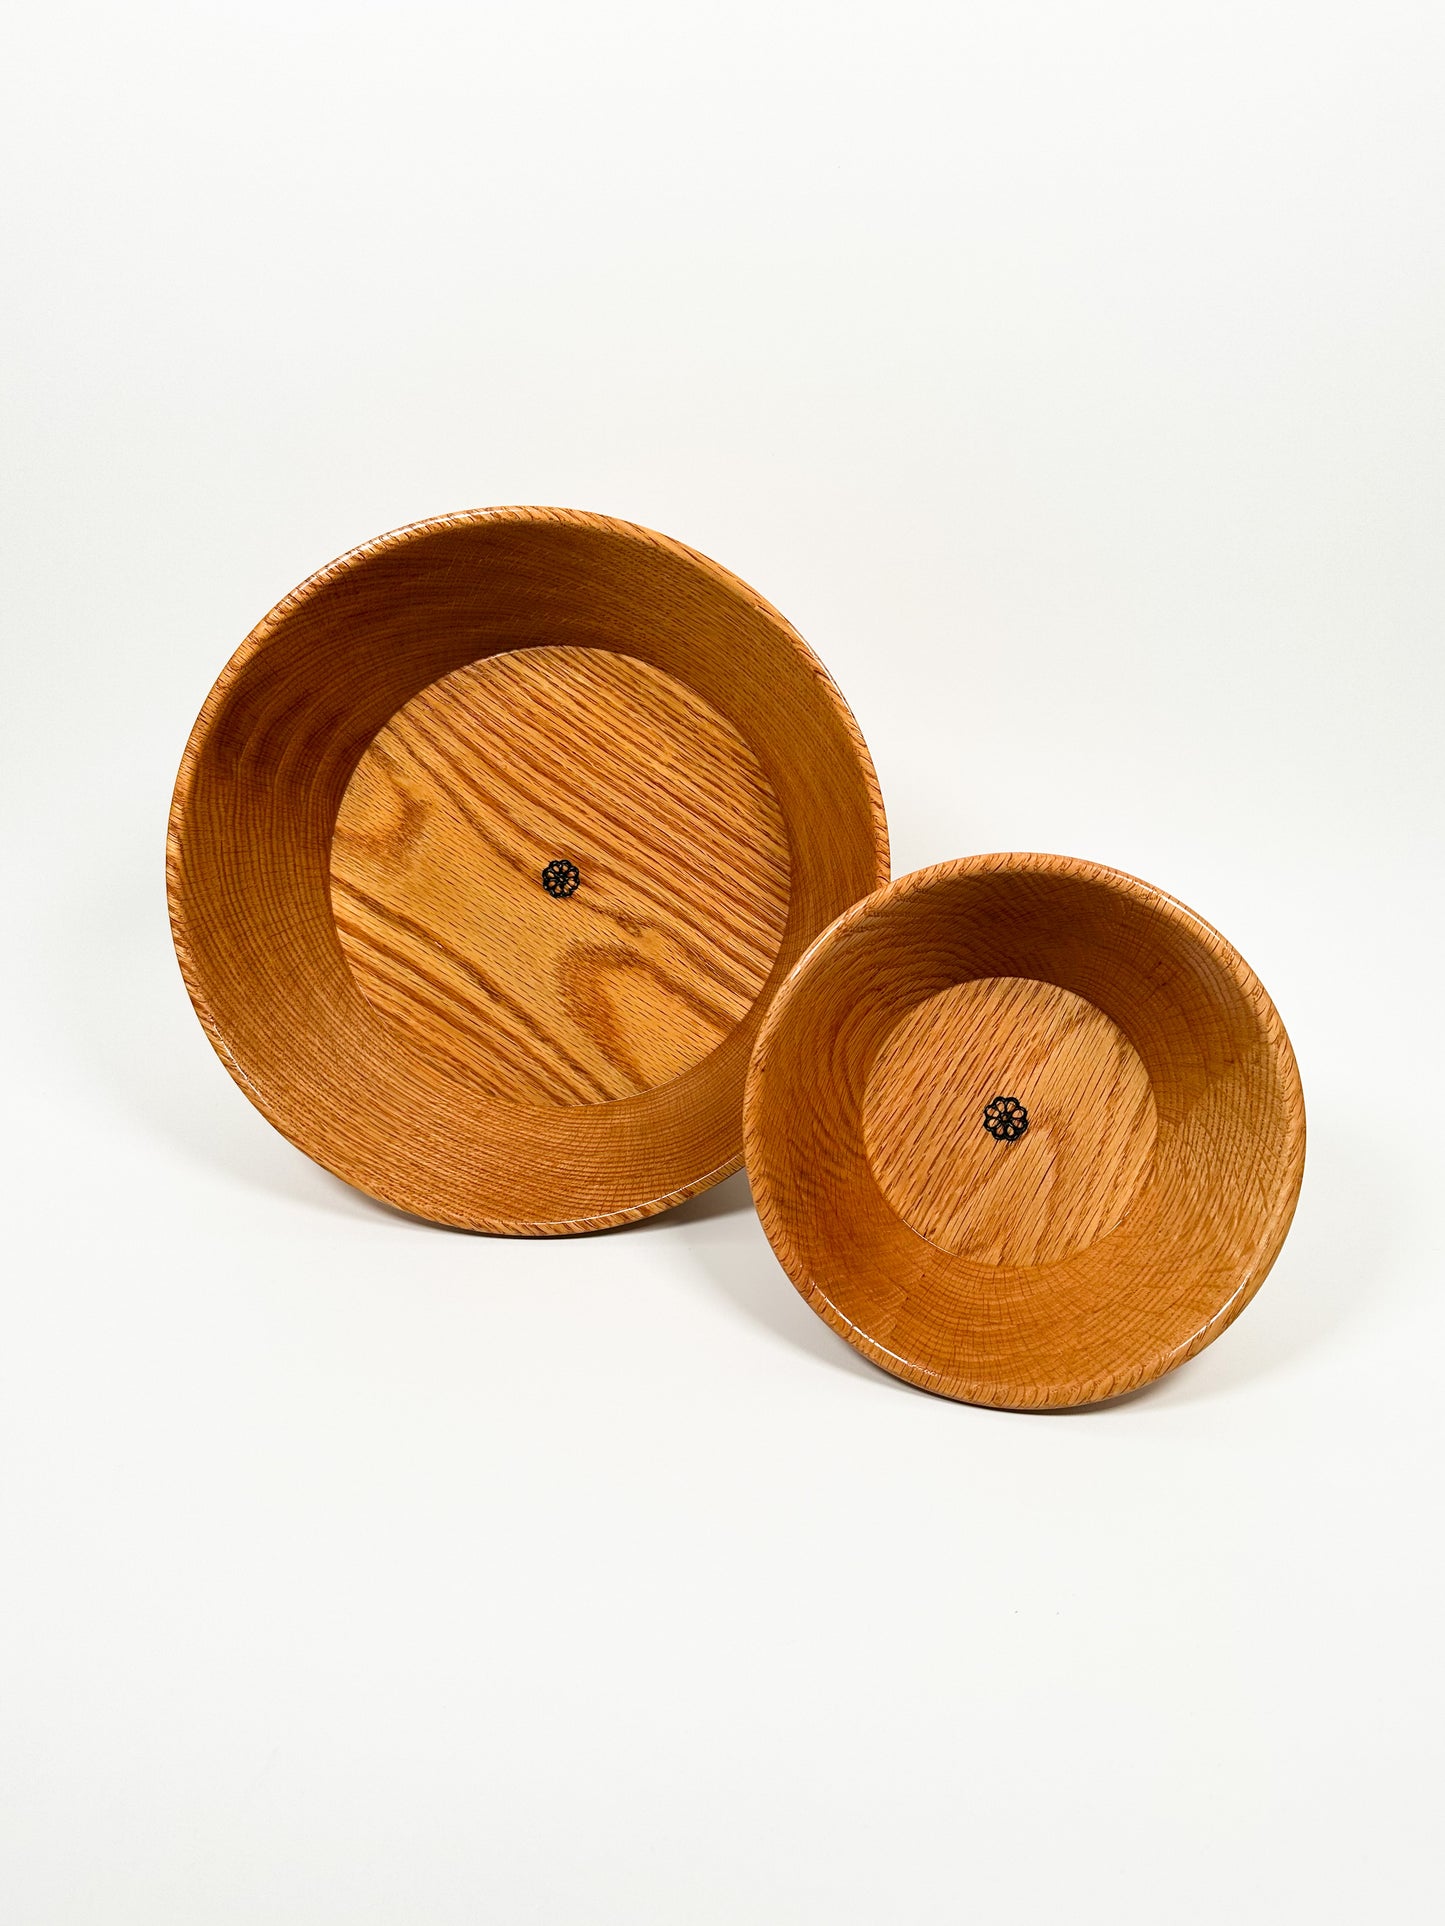 Handmade Red Oak Bowl Set